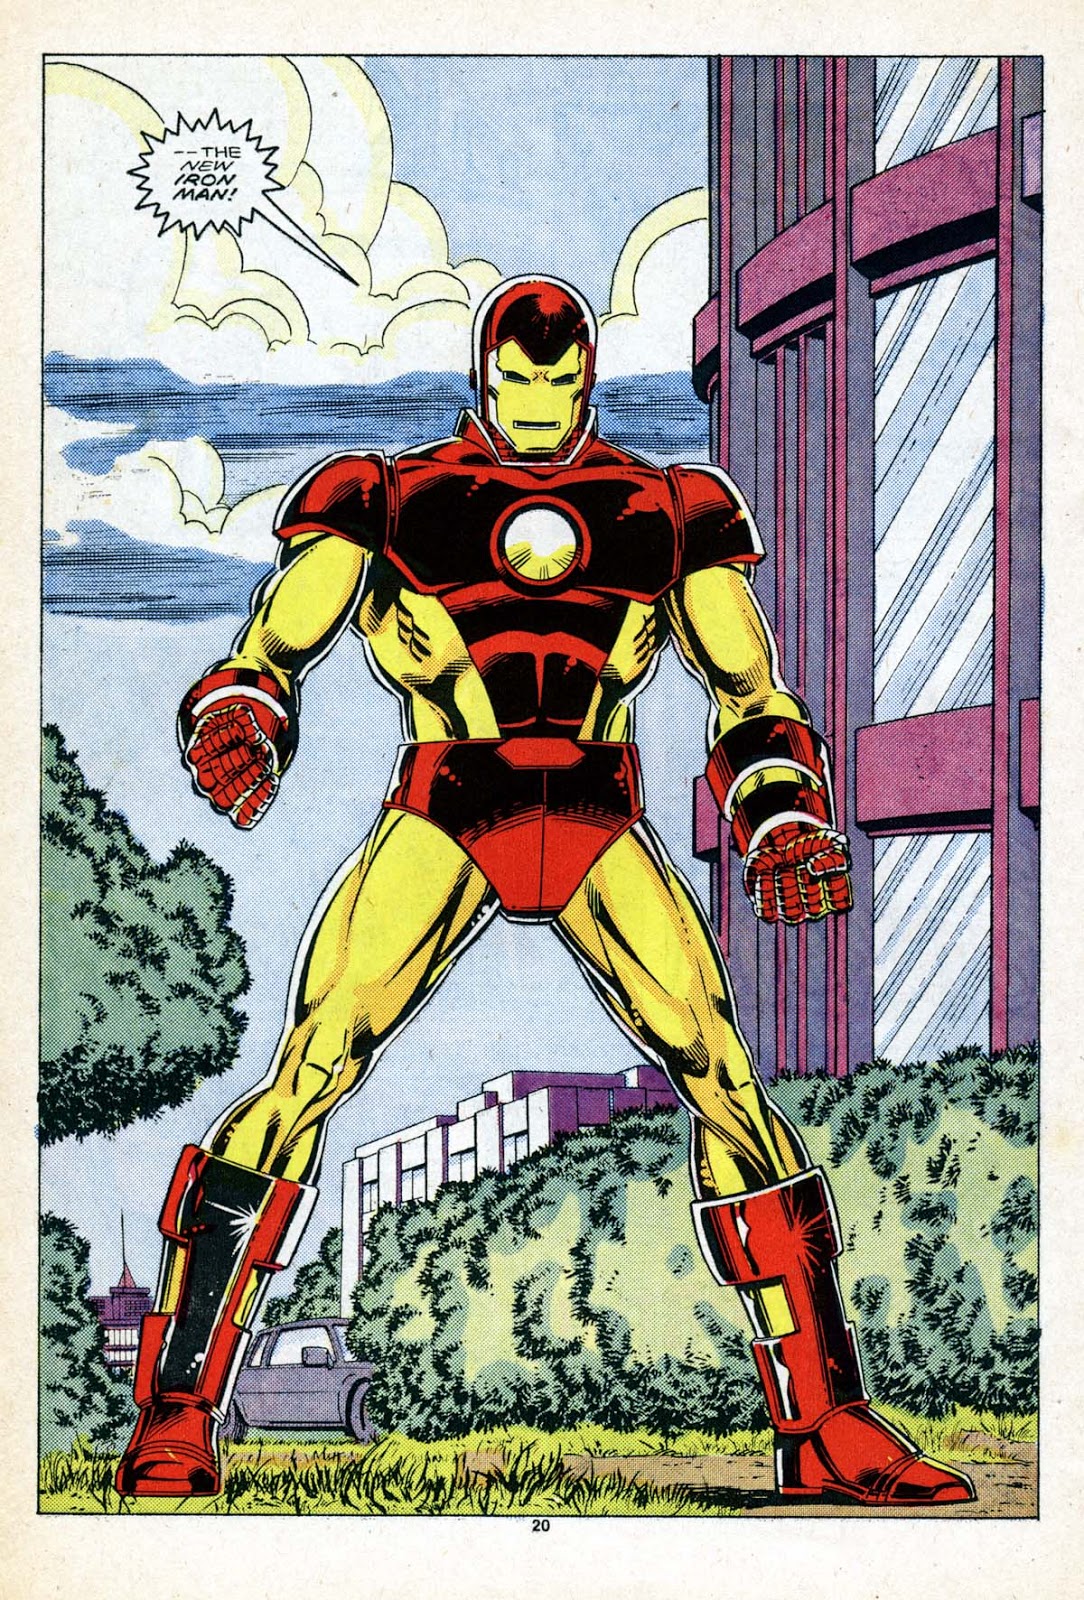 iron man 1990